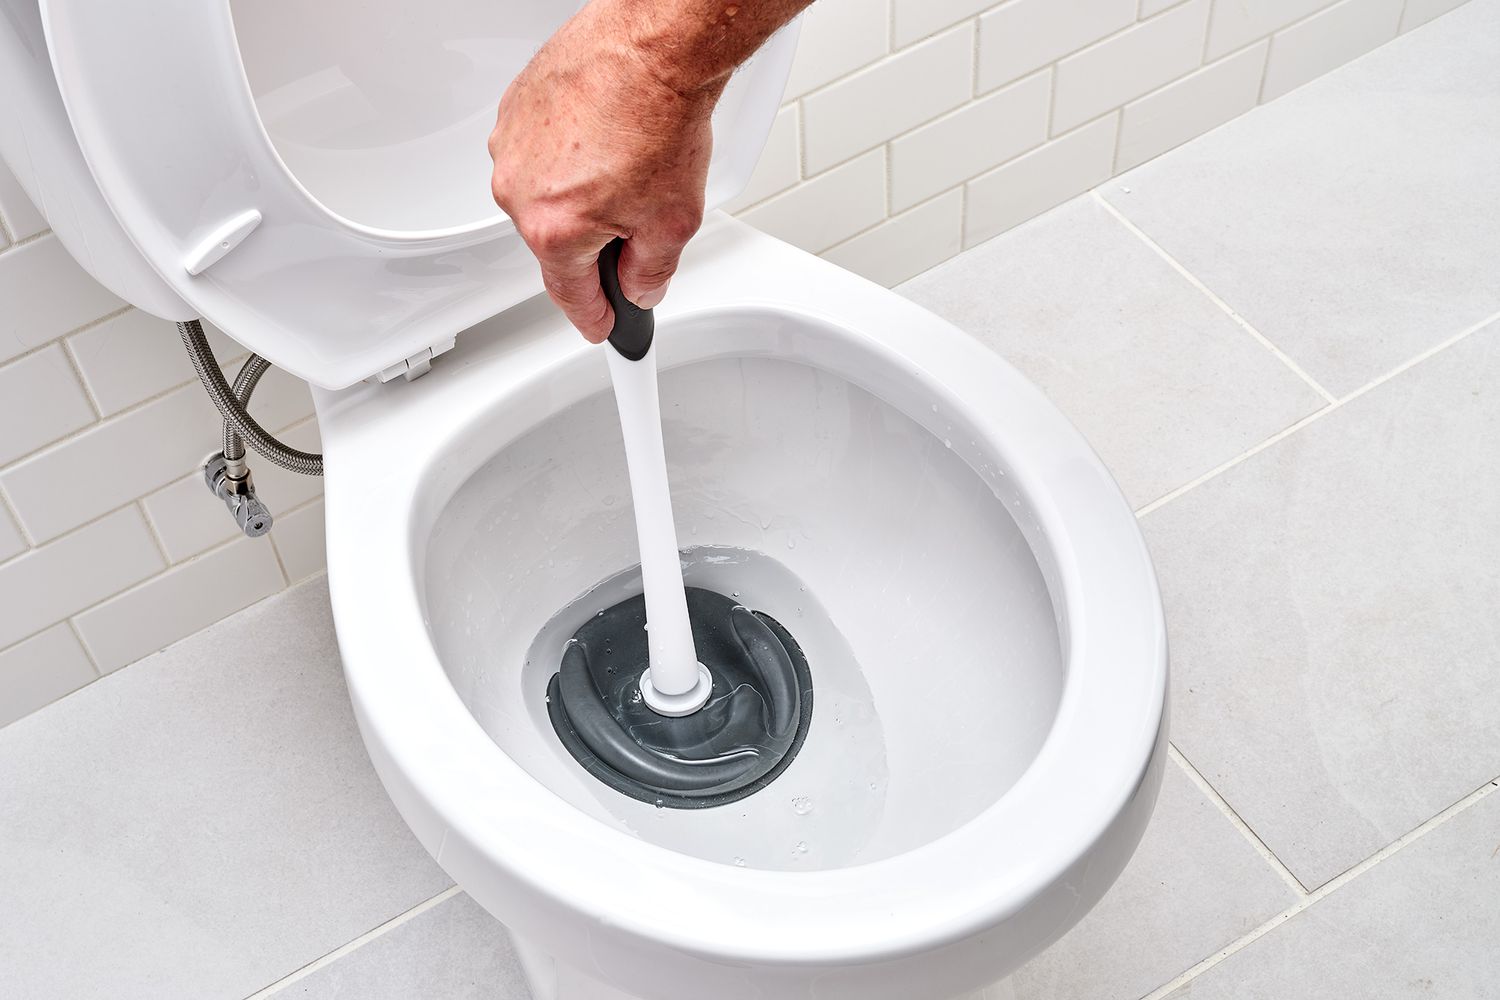 Toilet plunger pushed into bowl to loosen clog